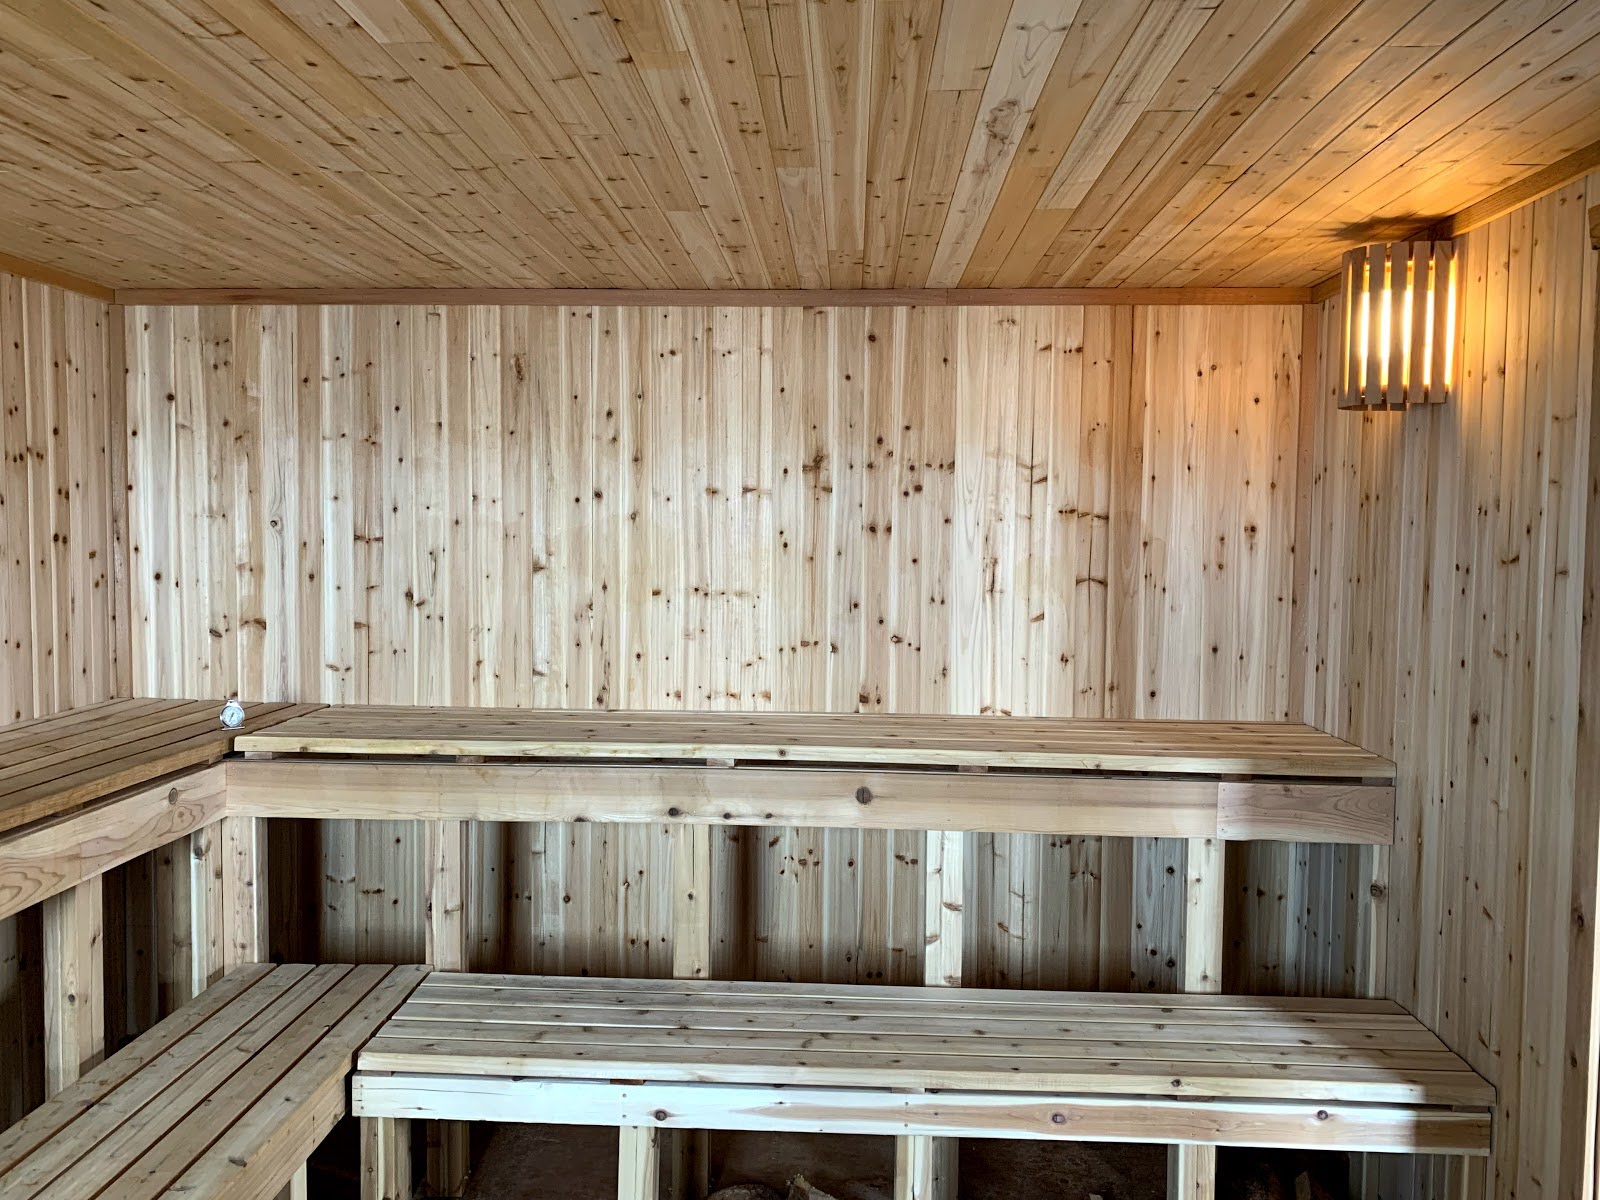 A peek inside the sauna